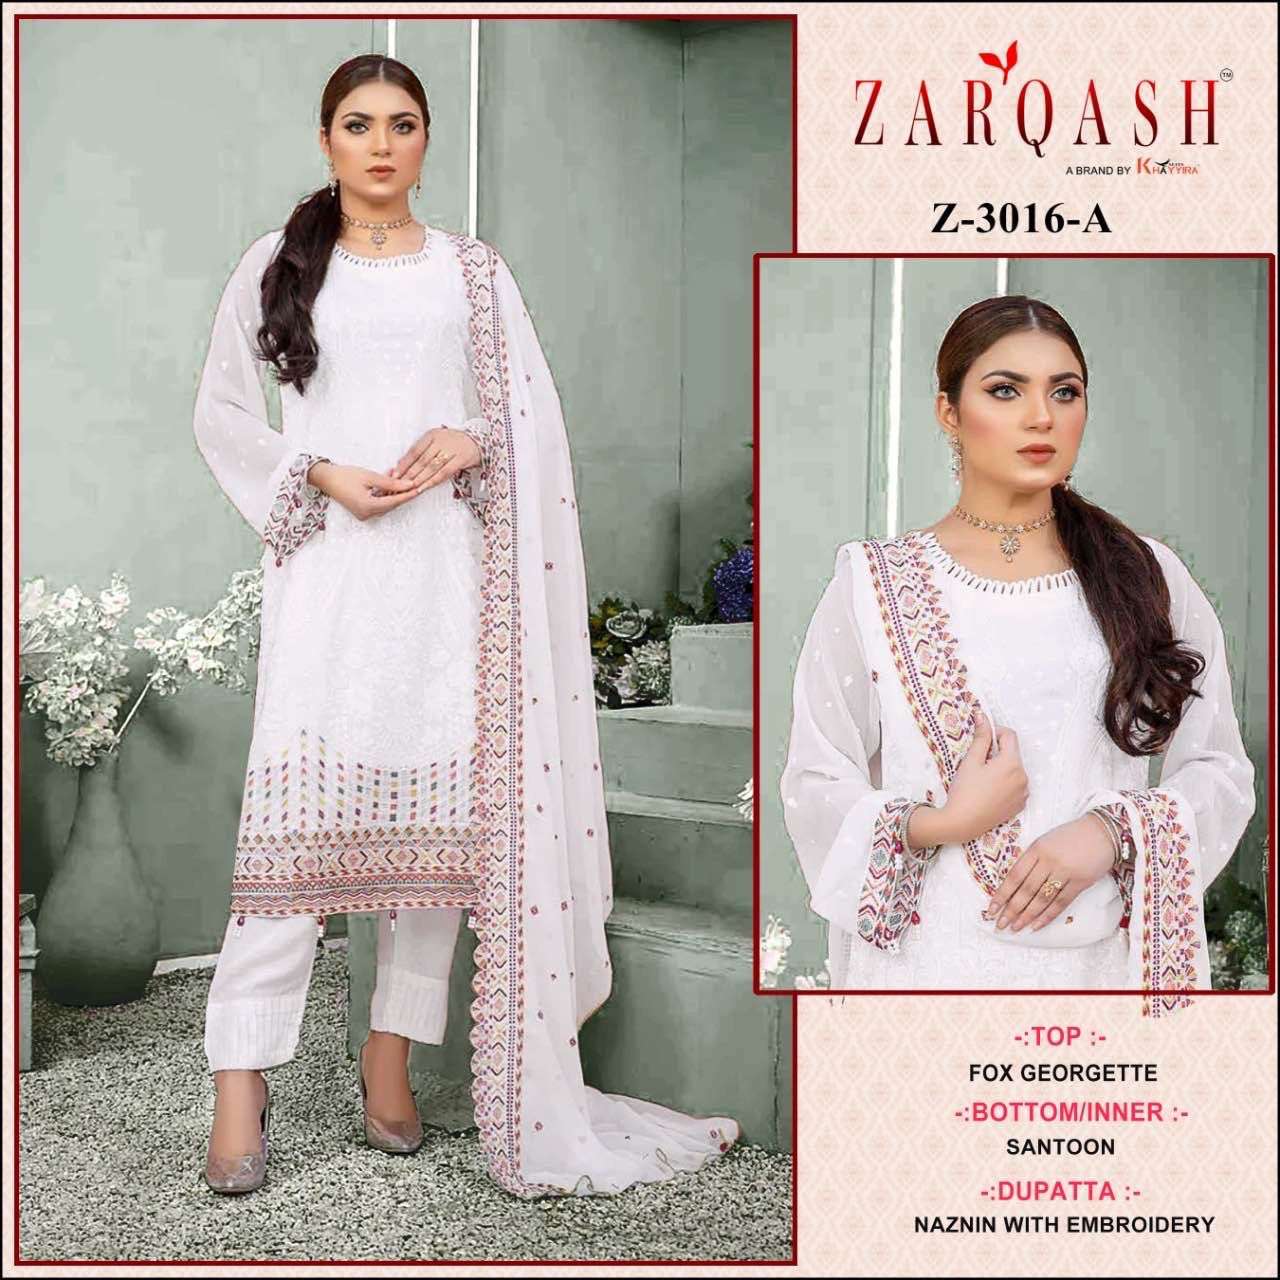 Zarqash Z-3016 Fox Georgette embroidered suit